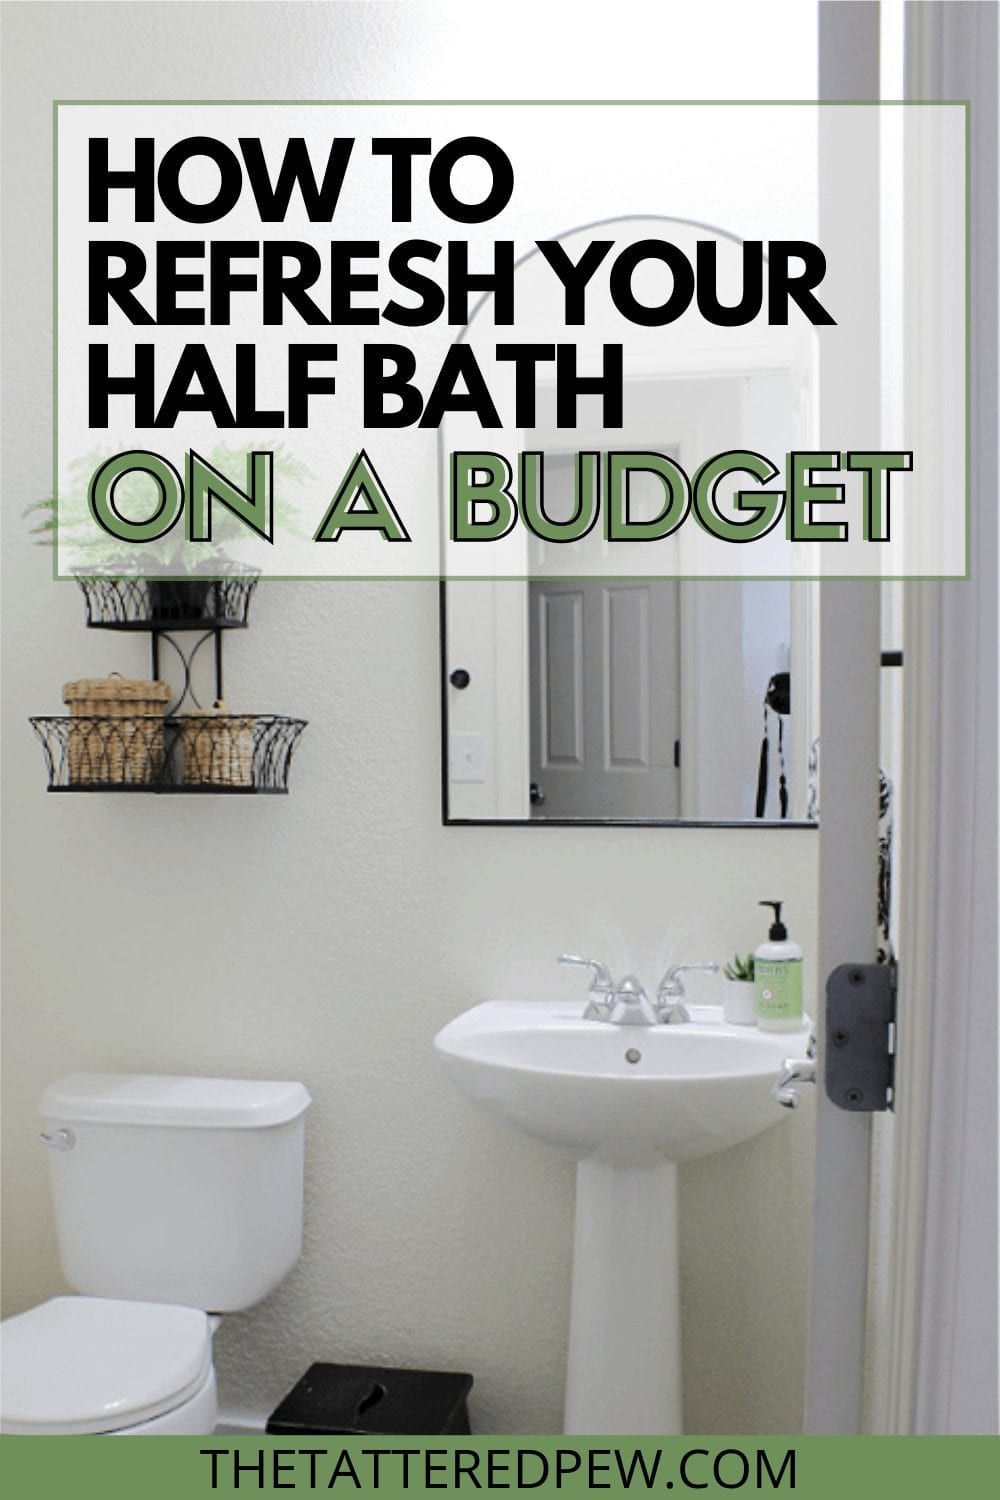 https://www.thetatteredpew.com/wp-content/uploads/how-to-refresh-half-bath-on-budget-1.jpg